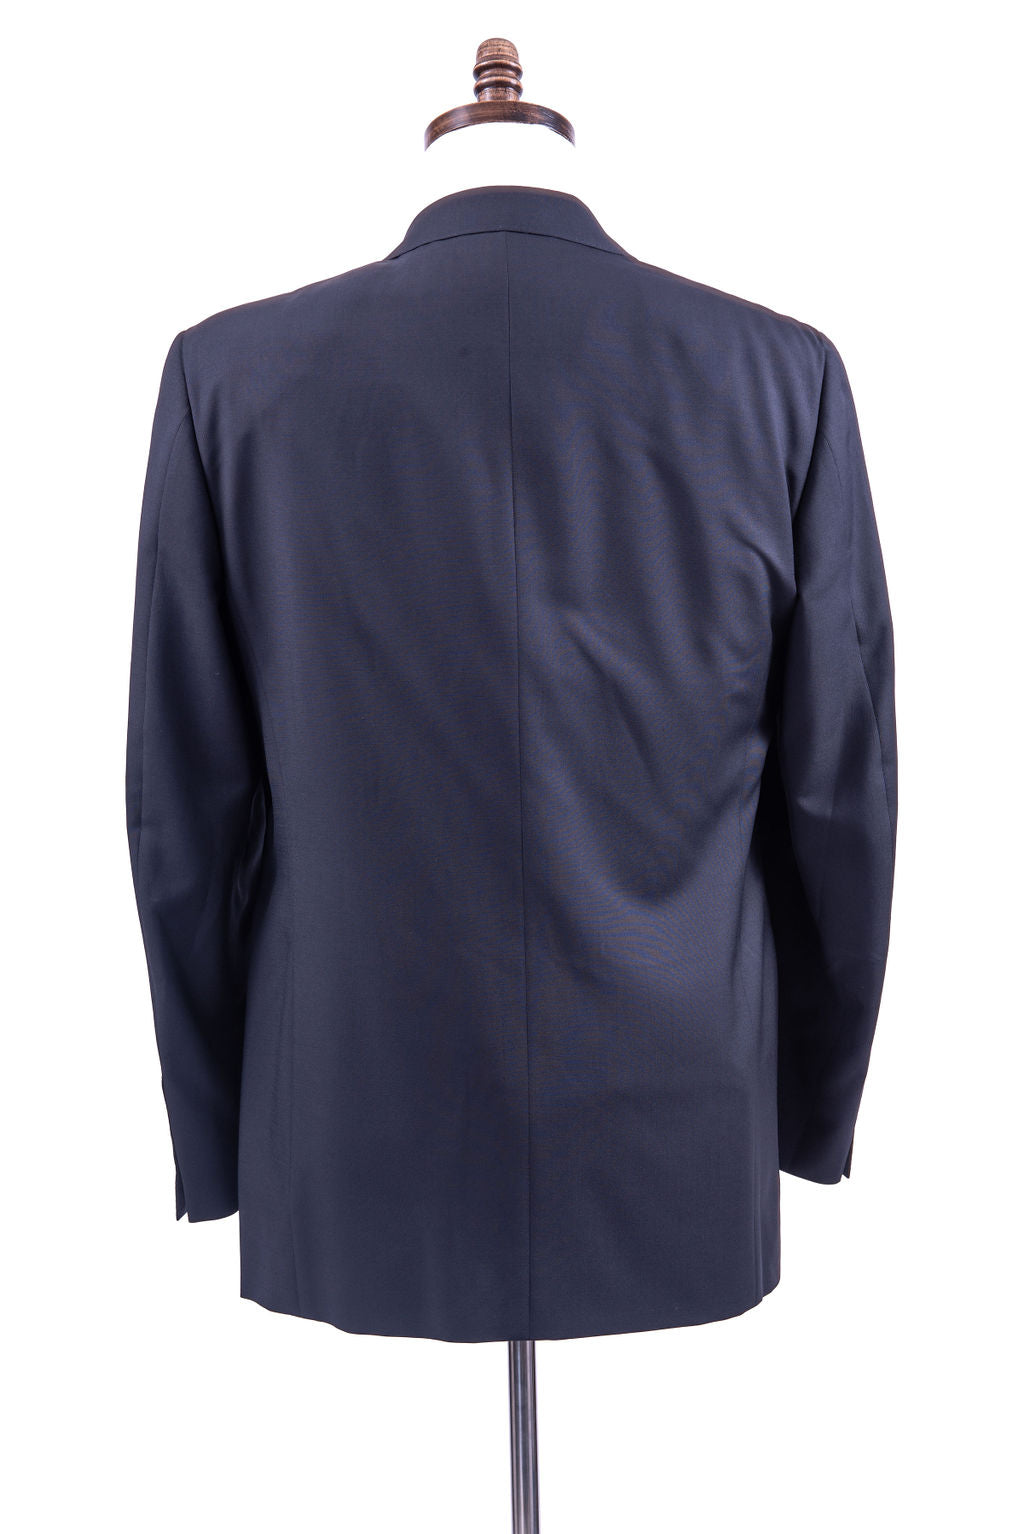 Canali 1934 Mens Navy Blue 42R Drop 7 Wool Tuxedo Suit With Satin Peak Lapels